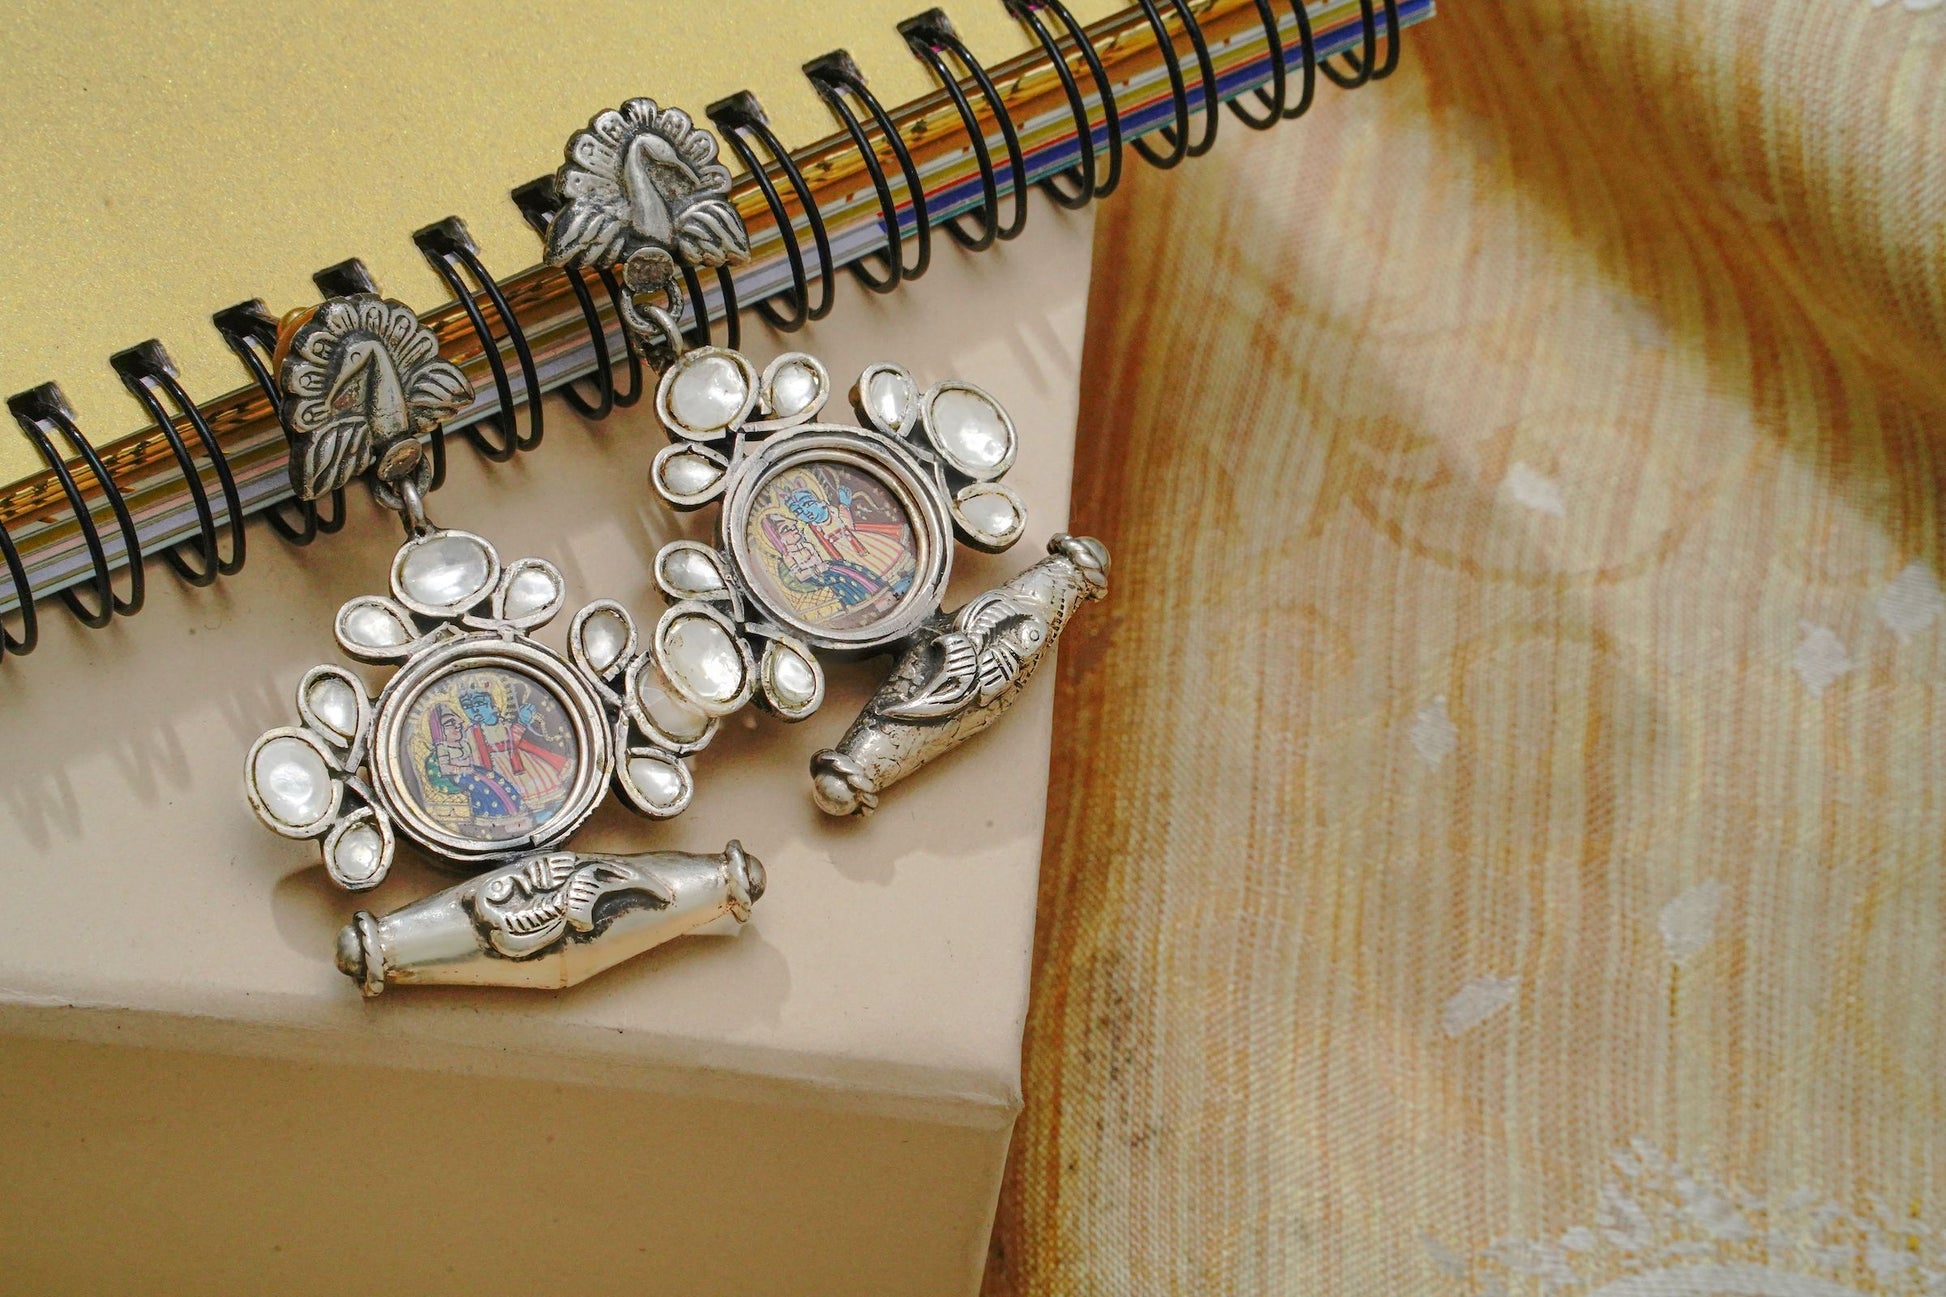 925 Silver Peacock Earrings with Handpainting - Neeta Boochra Jewellery